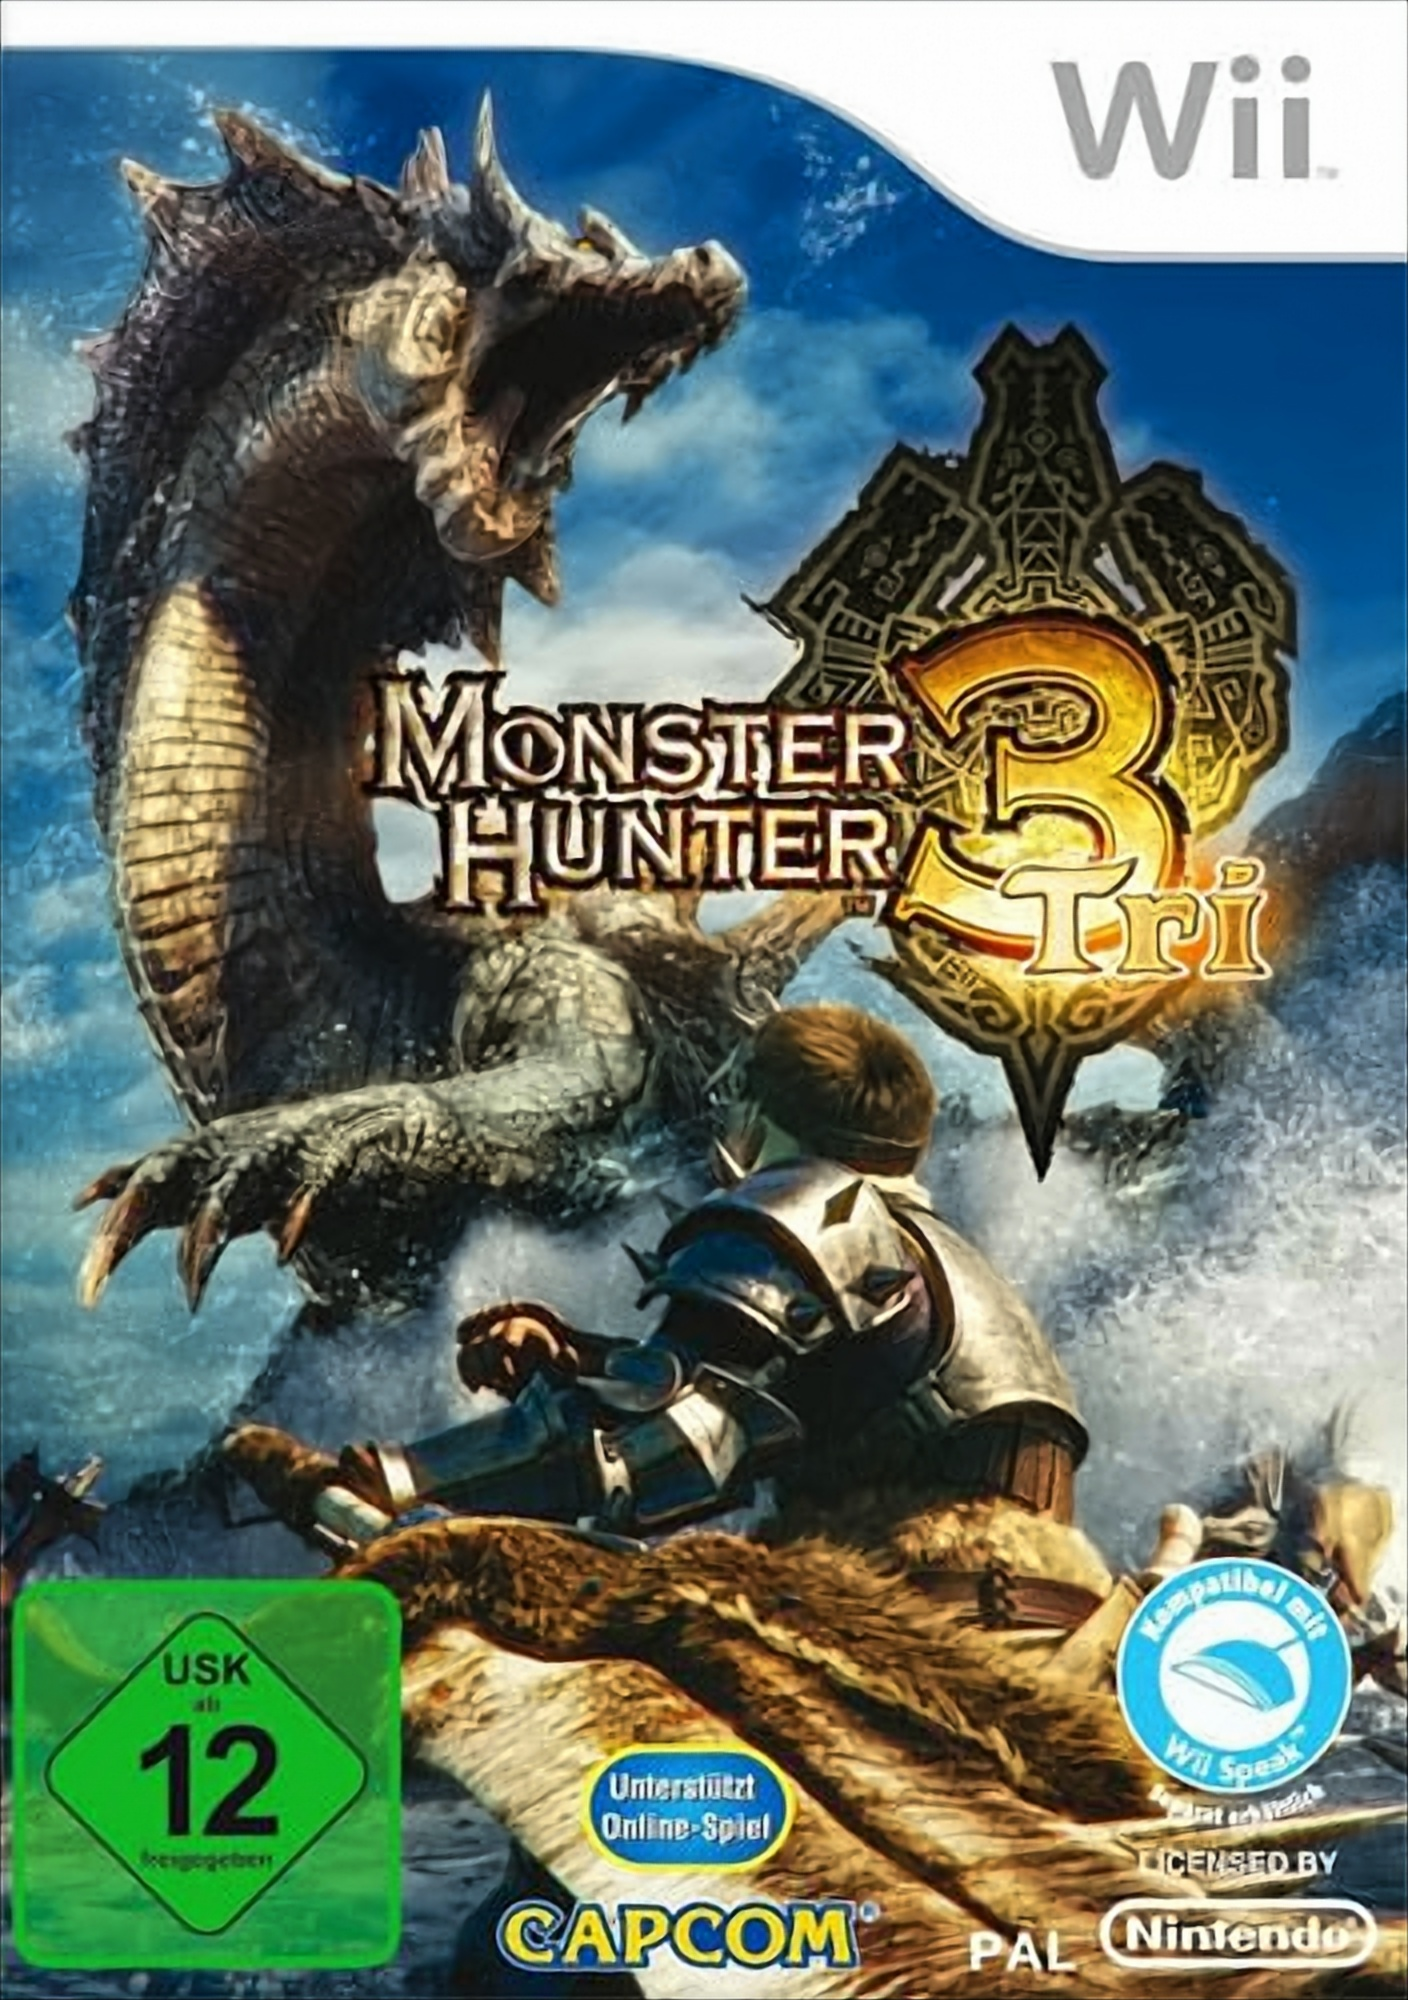 Tri Monster Wii] - Wii [Nintendo Hunter